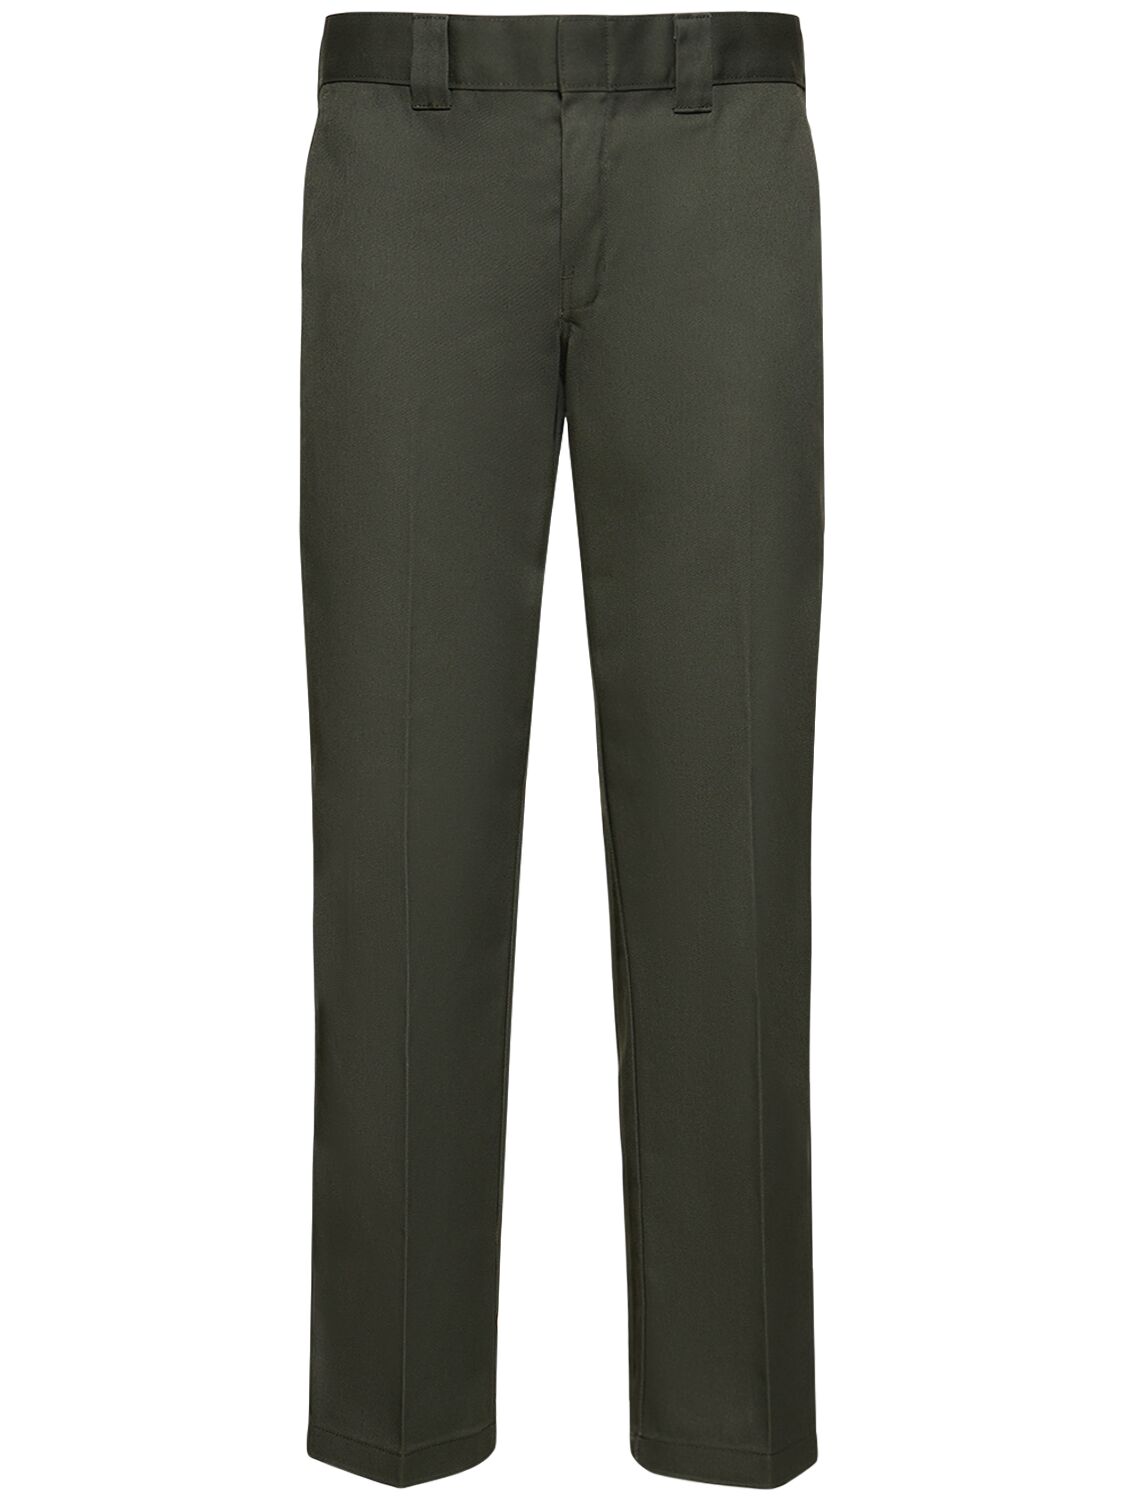 Dickies 873 Work Pants In Khaki Slim Straight Fit - Mgreen In Green